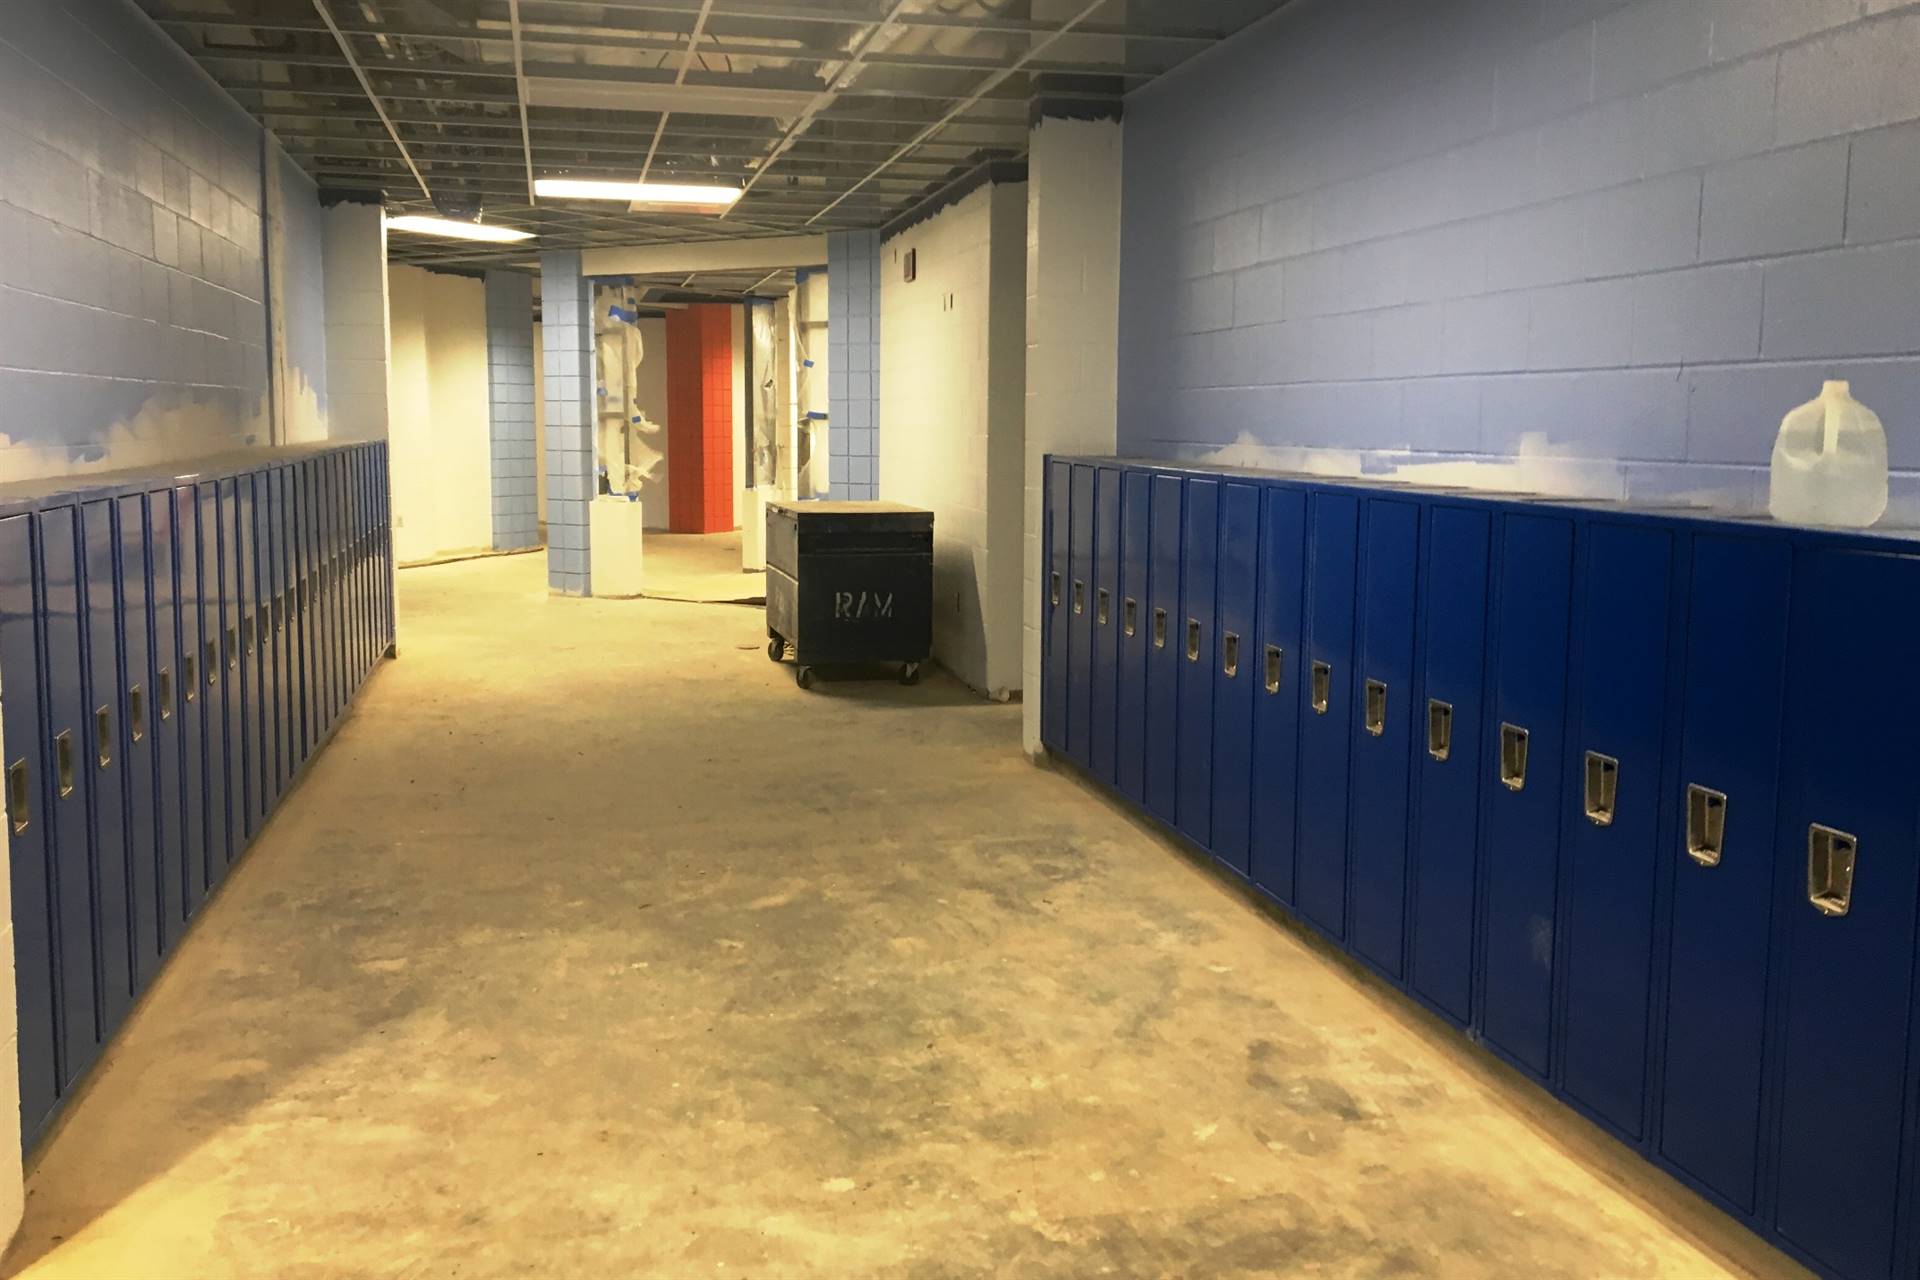 hallway with lockers